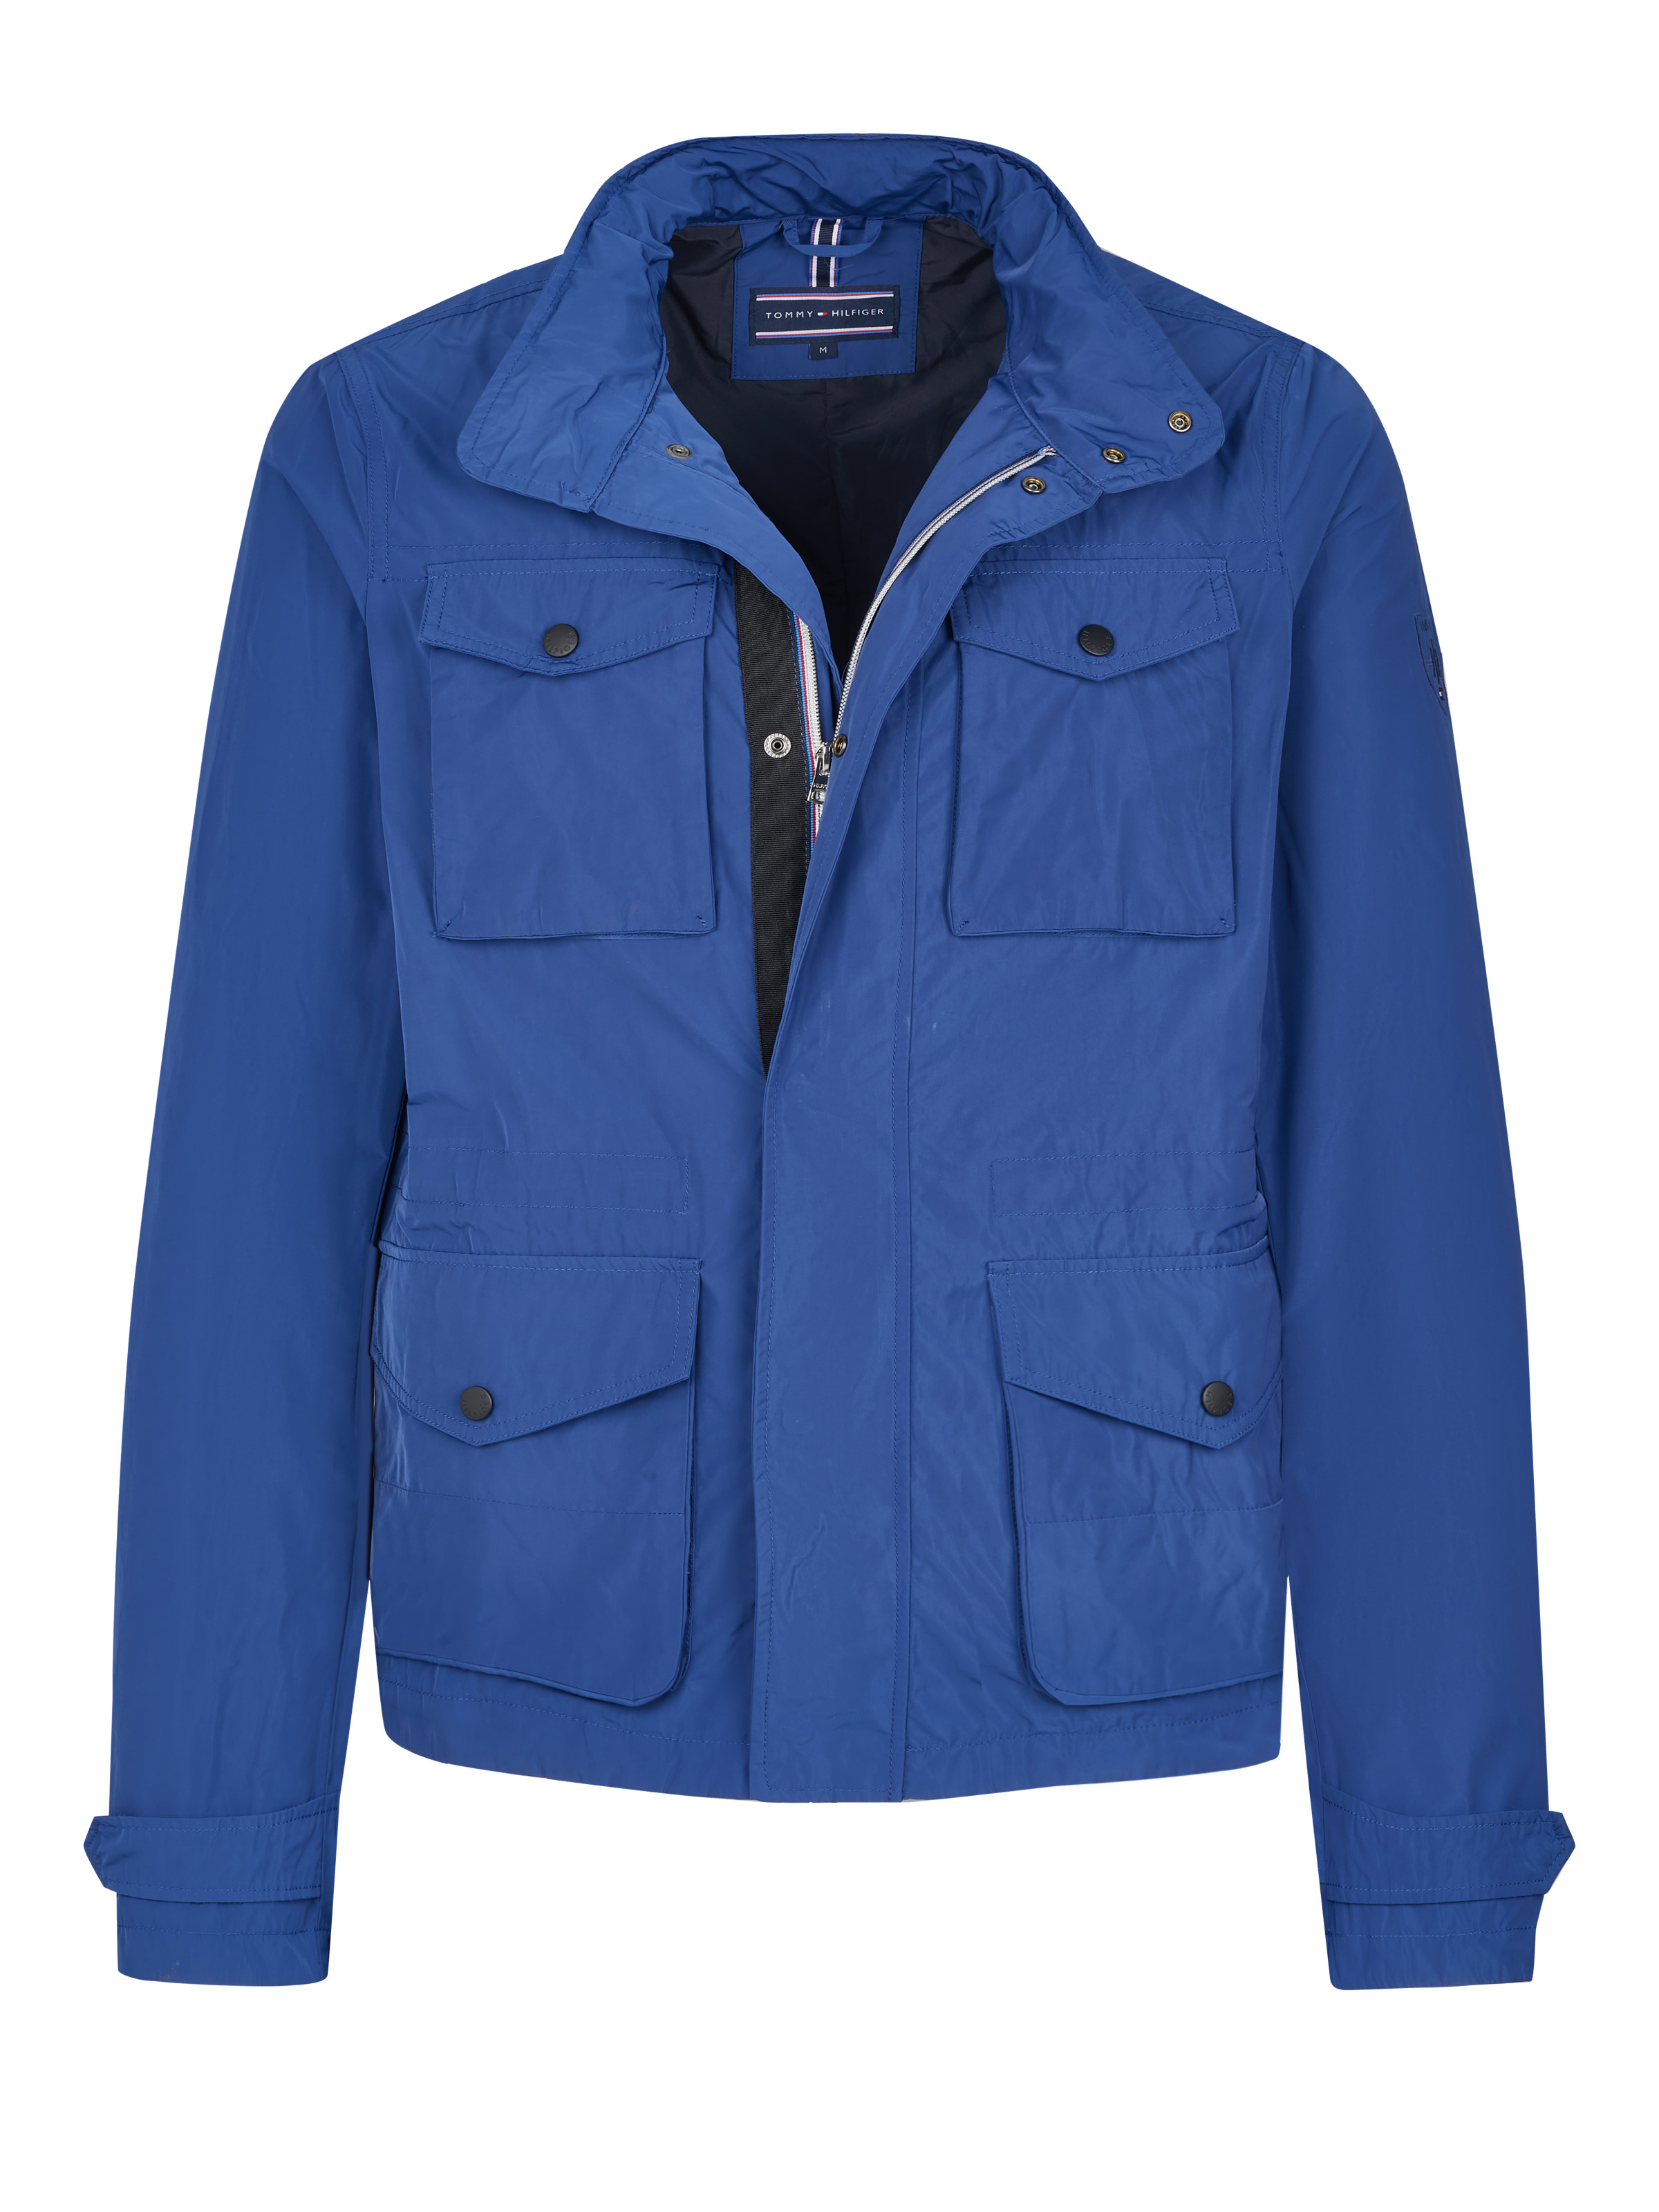 Tommy Hilfiger Jacket on SALE | Fashionesta